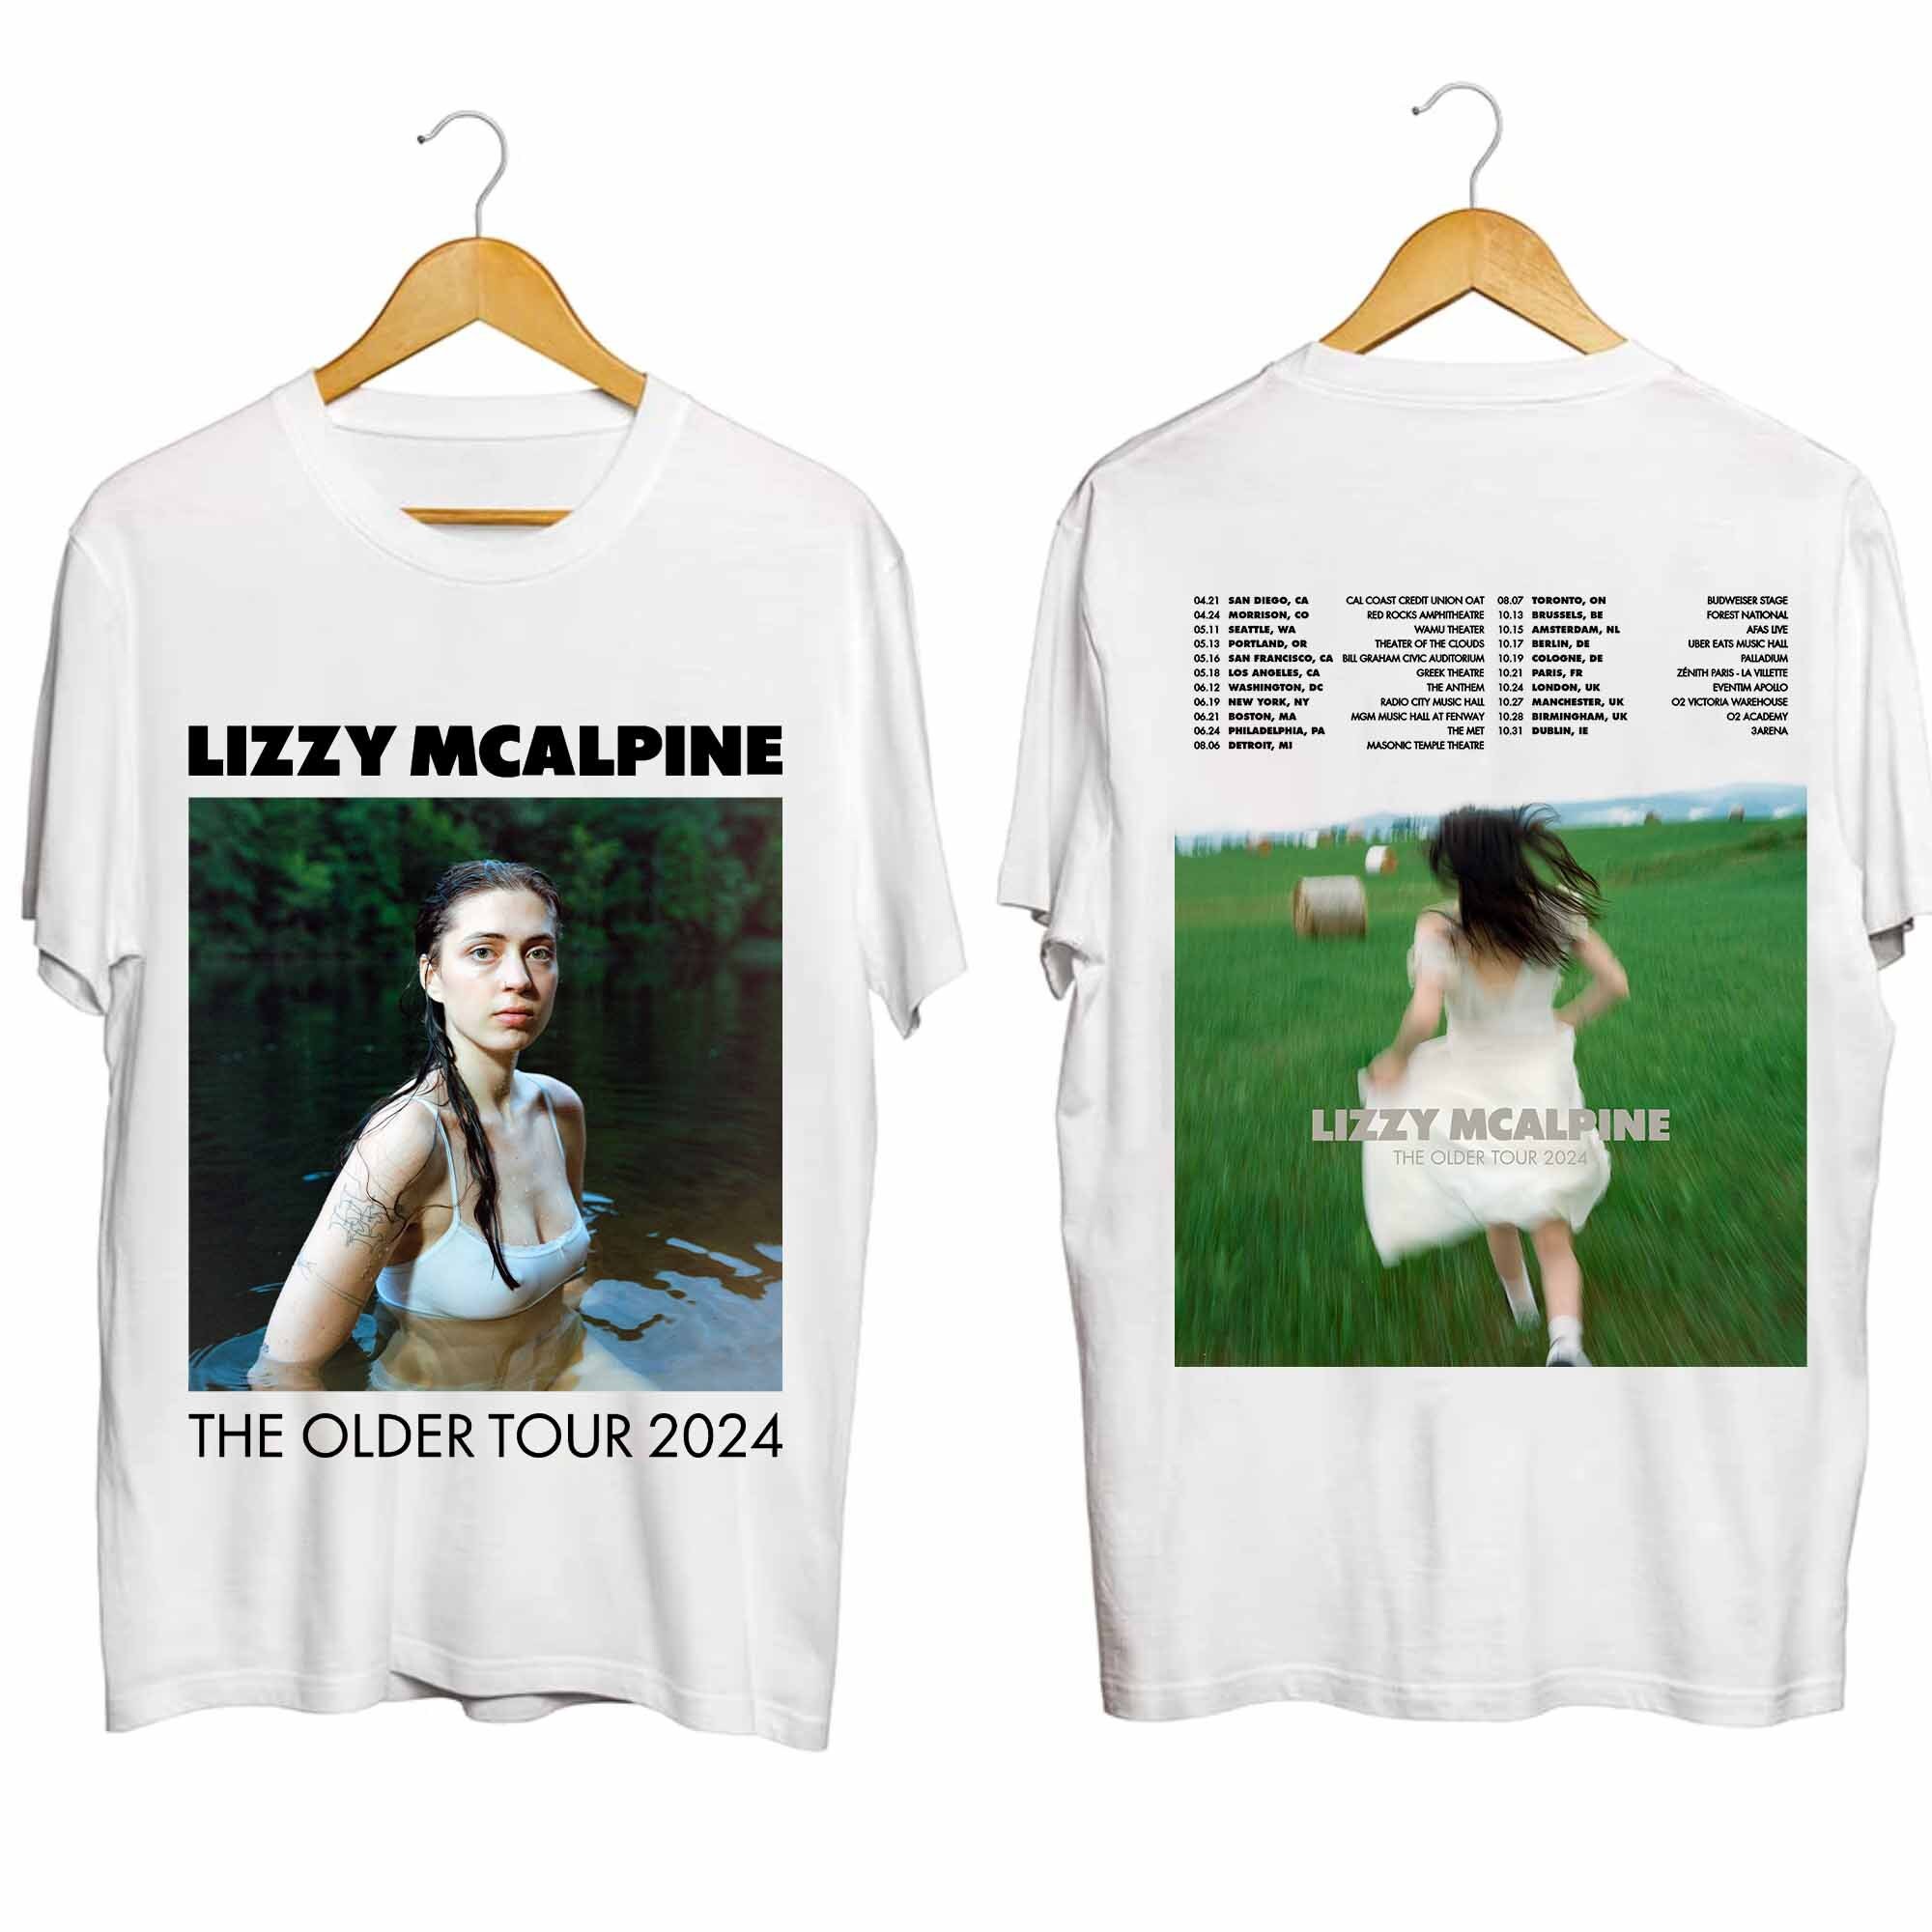 Lizzy McAlpine The Older Tour 2024 Shirt, Lizzy McAlpine Fan Shirt